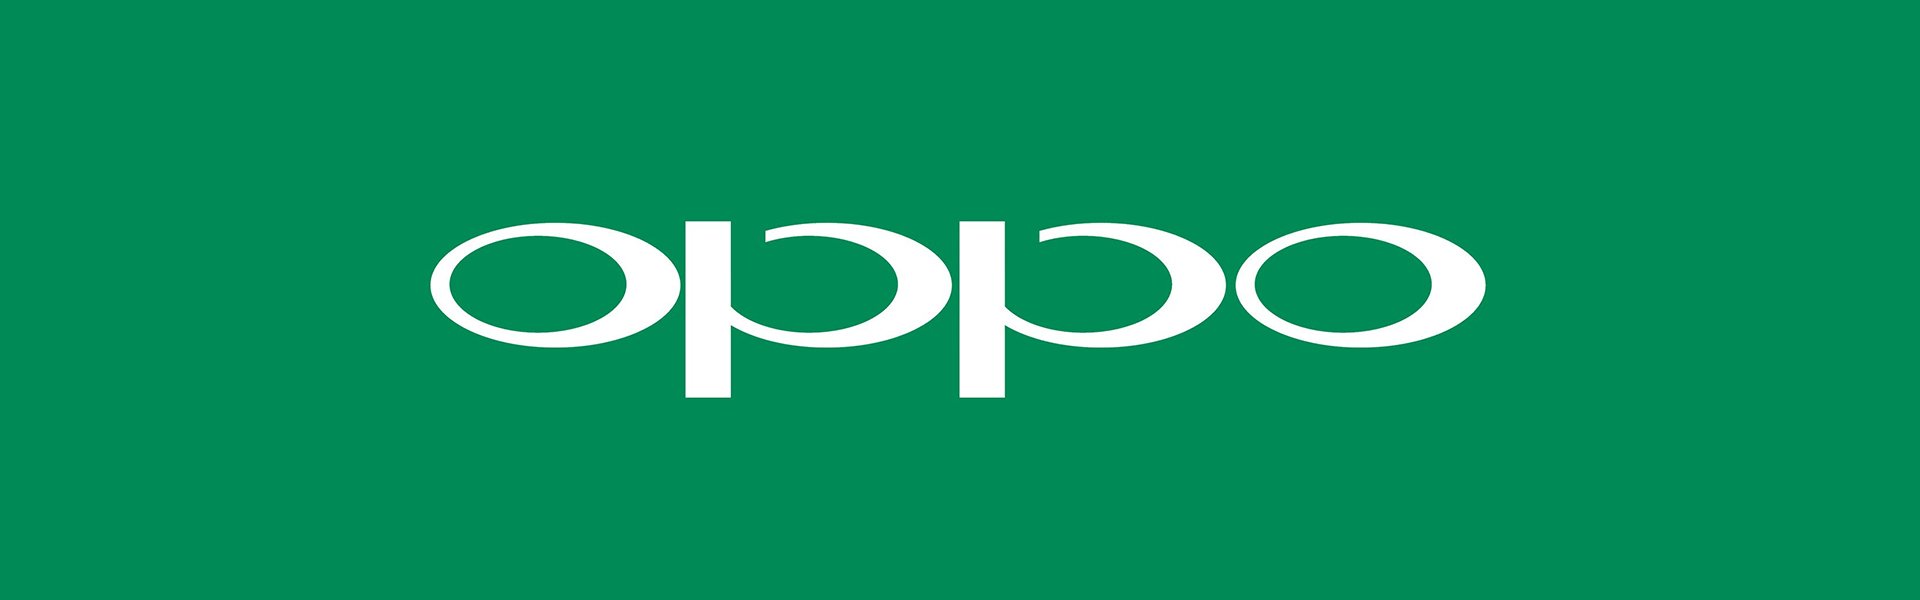 Oppo Reno 4 Pro, 256 GB, Dual SIM Black OPPO